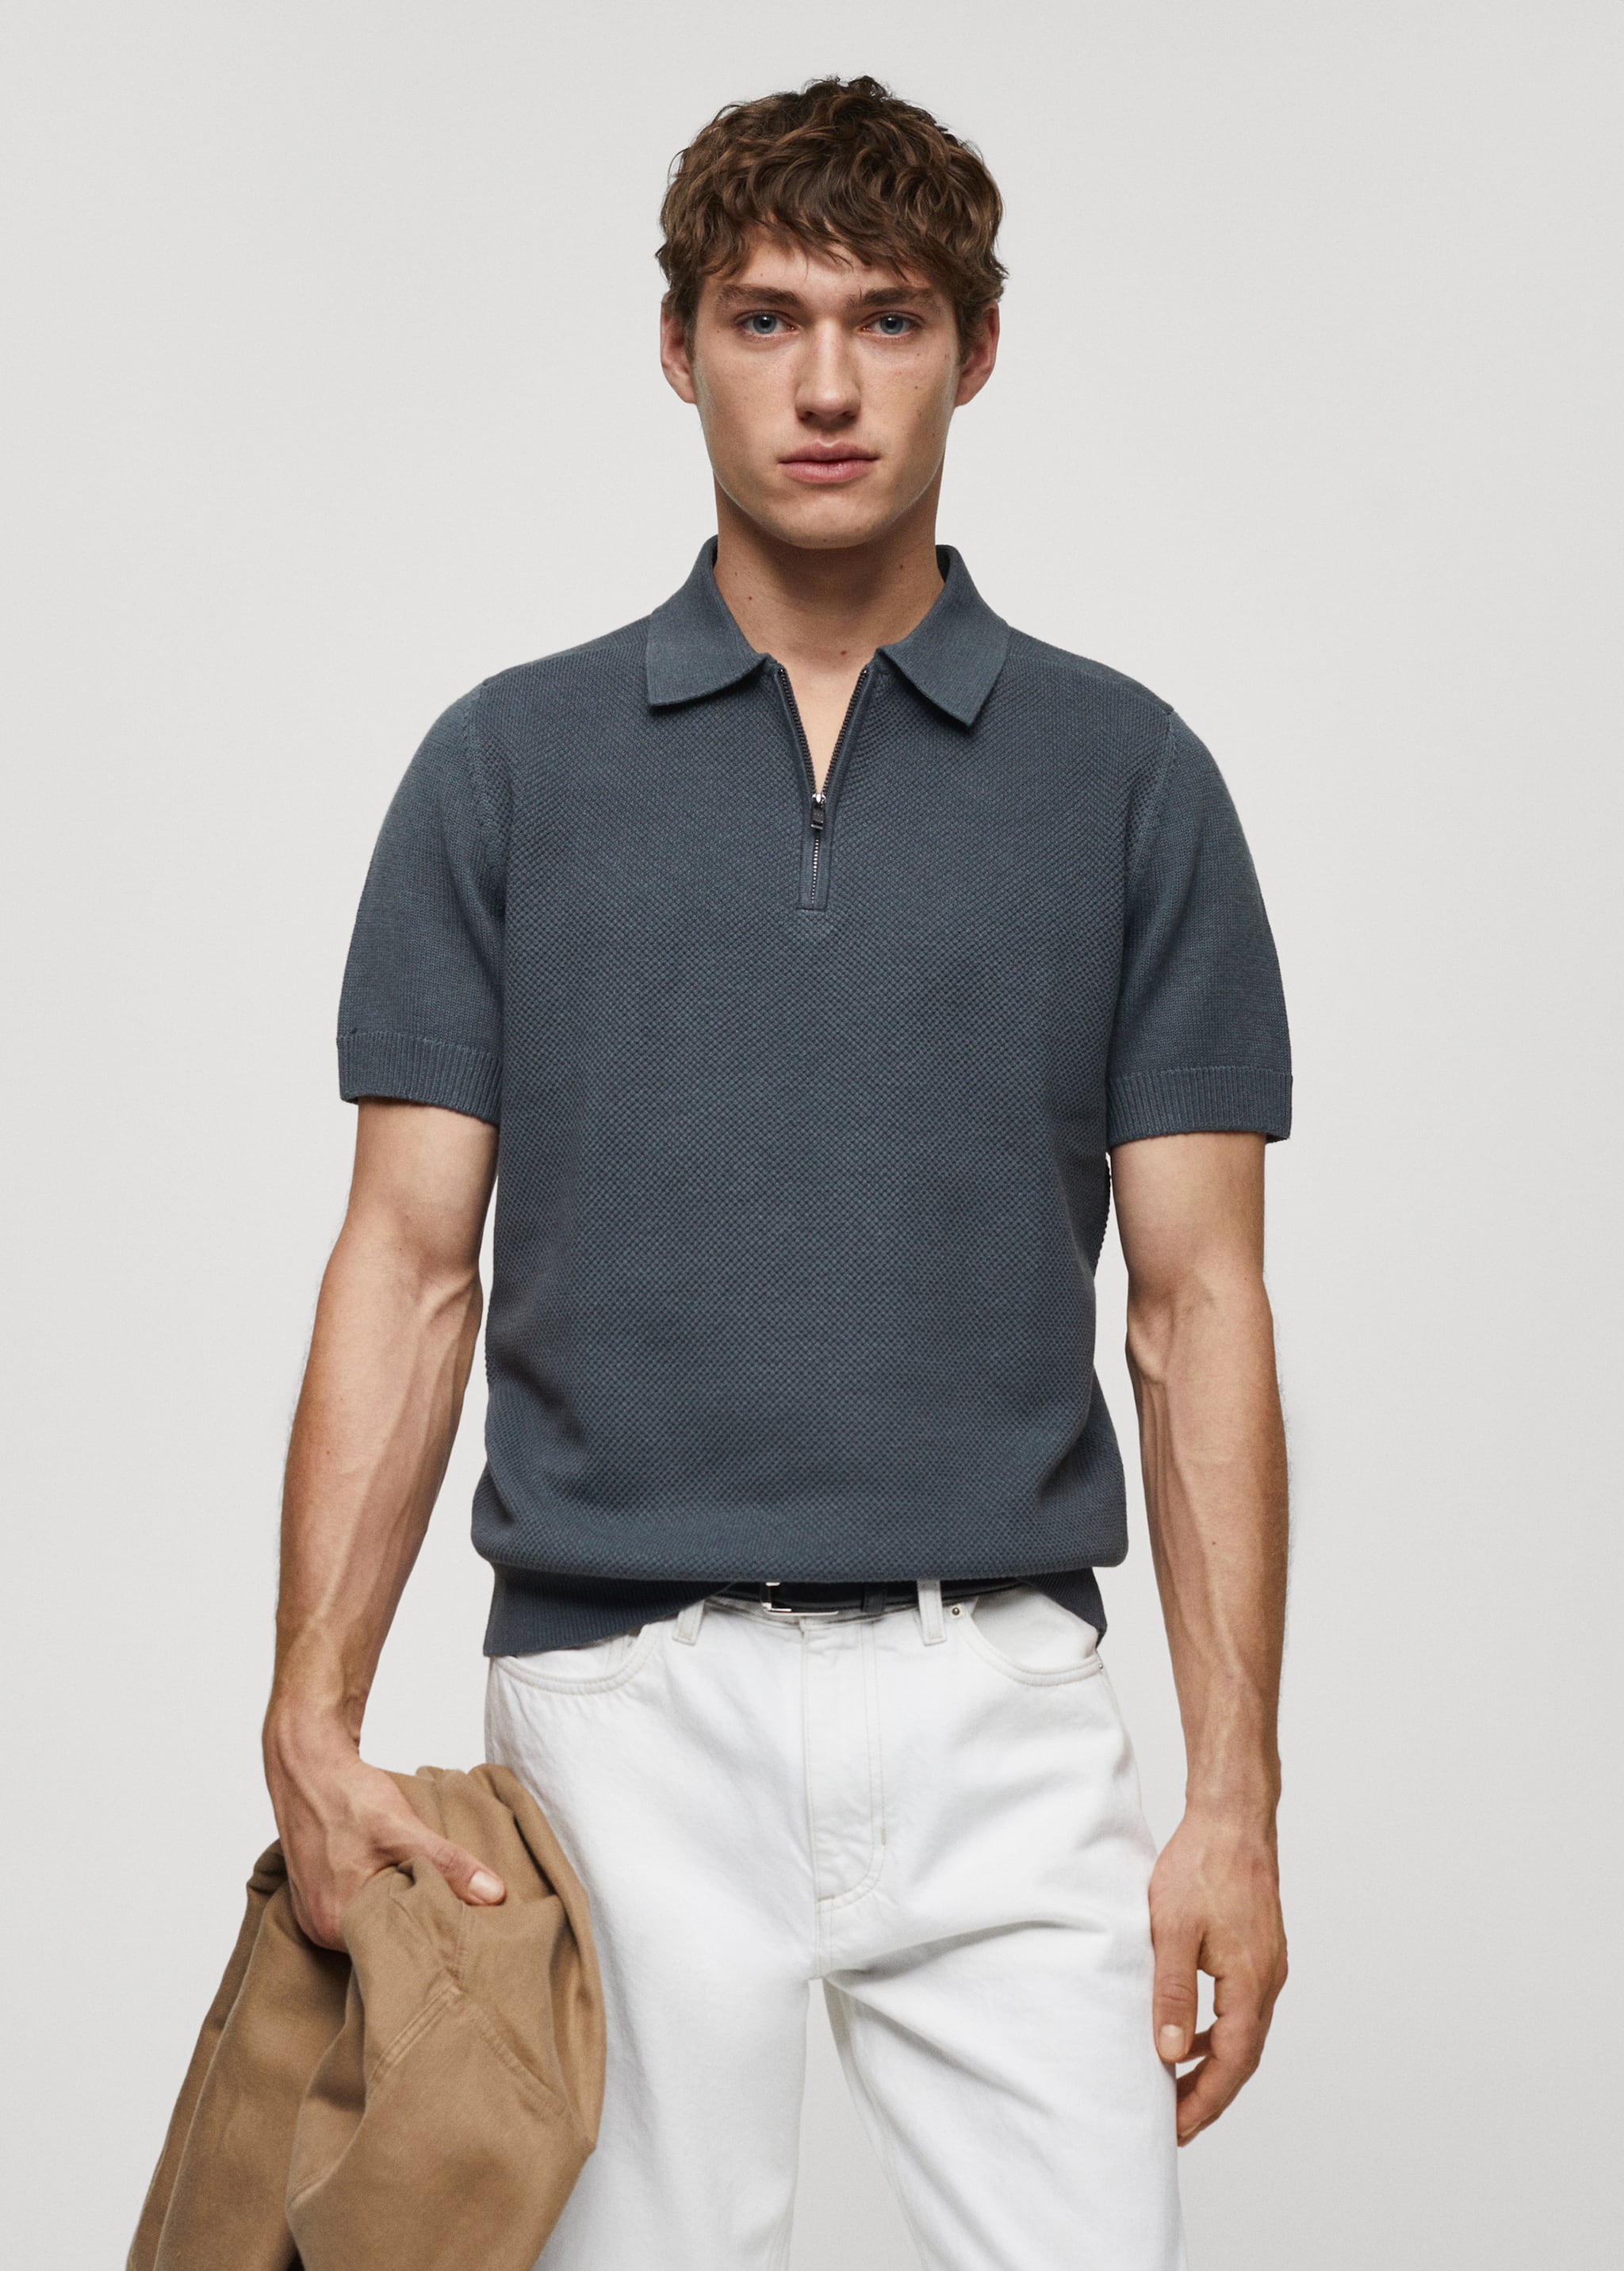 Cotton-knit polo shirt with zip - Medium plane